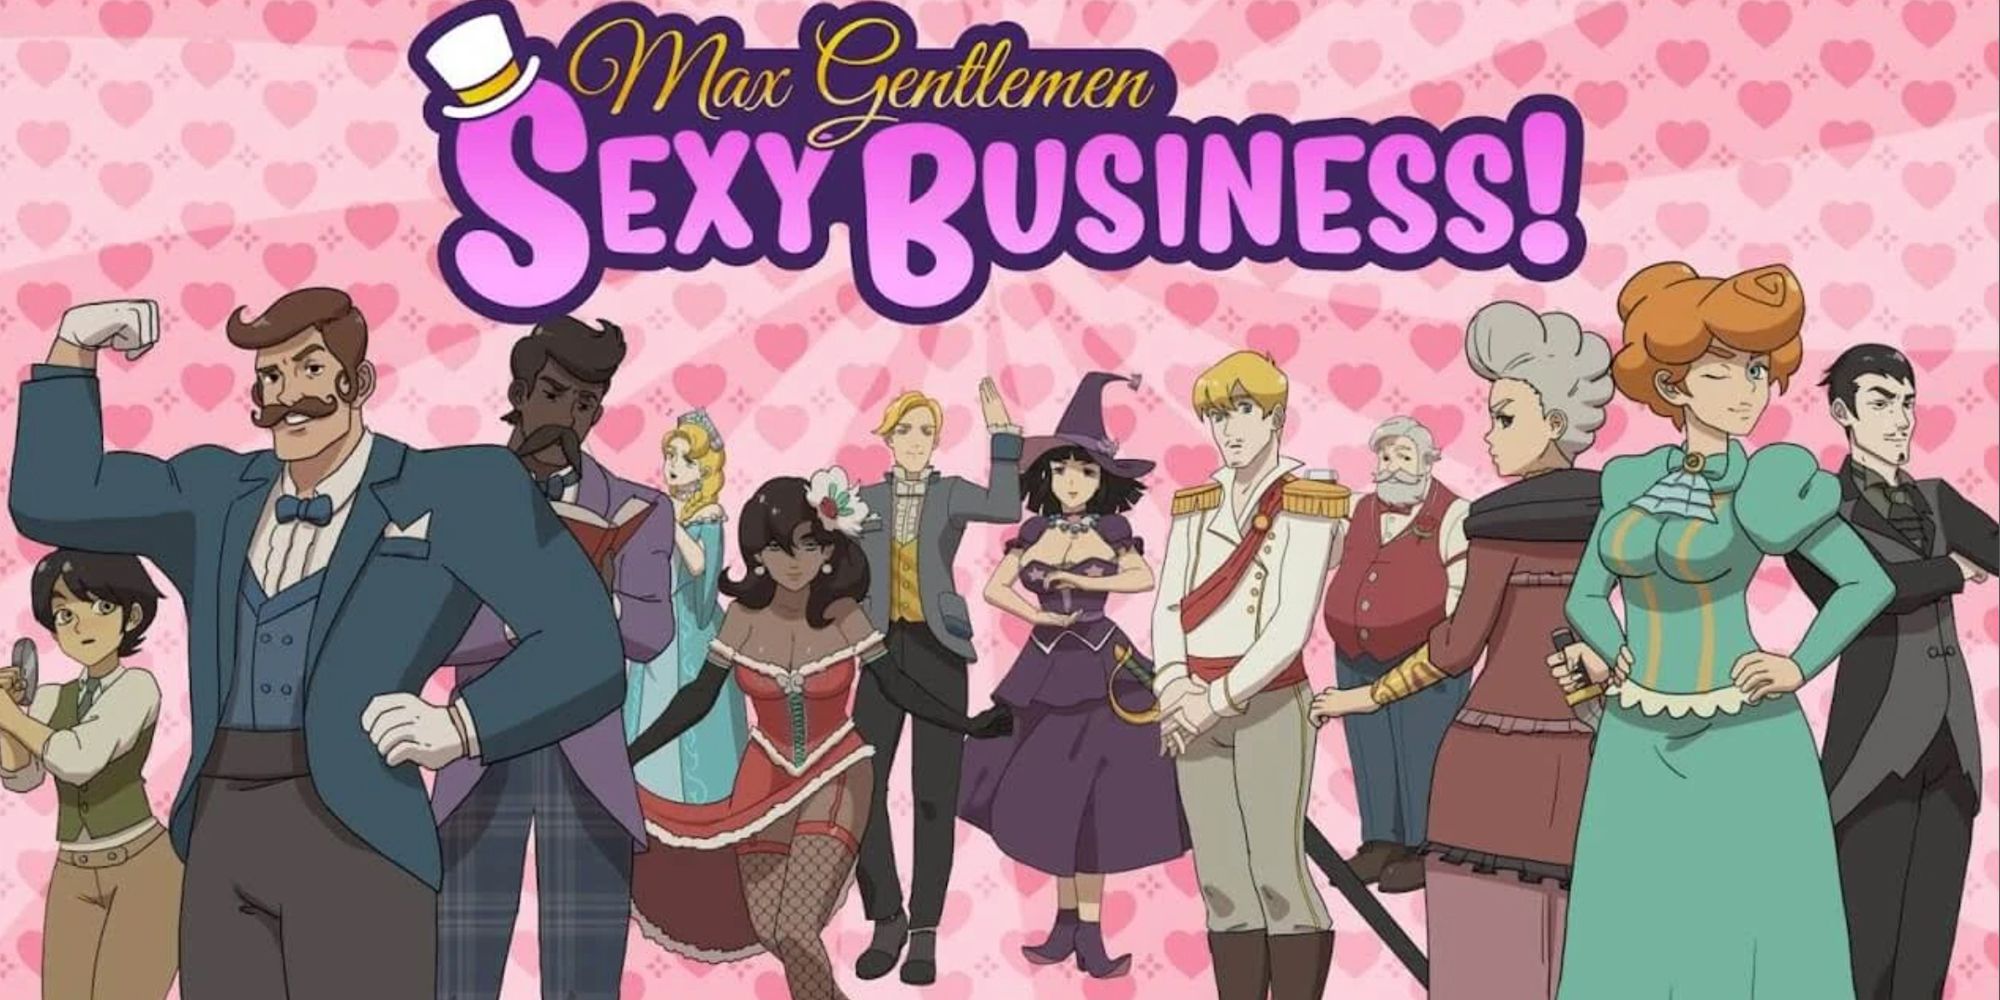 Max Gentlemen Sexy Business business tycoon simulator free love dating sim elements